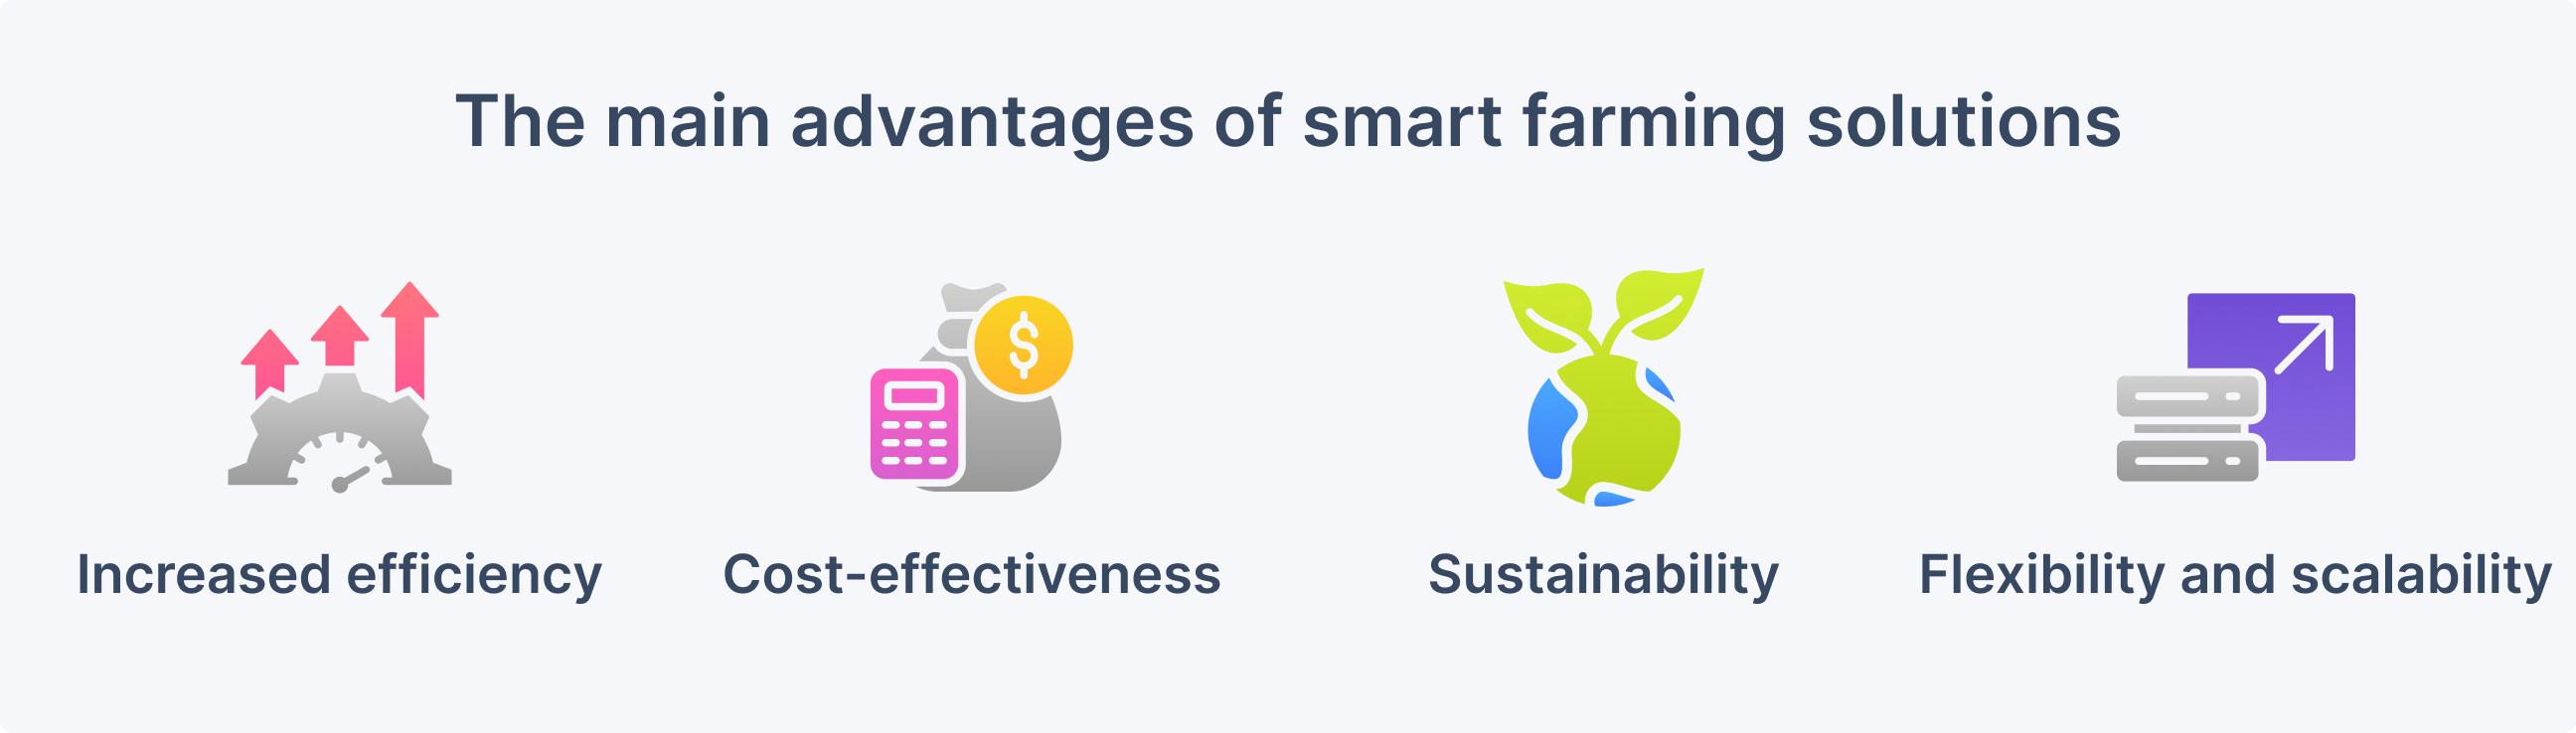 Smart farming benefits